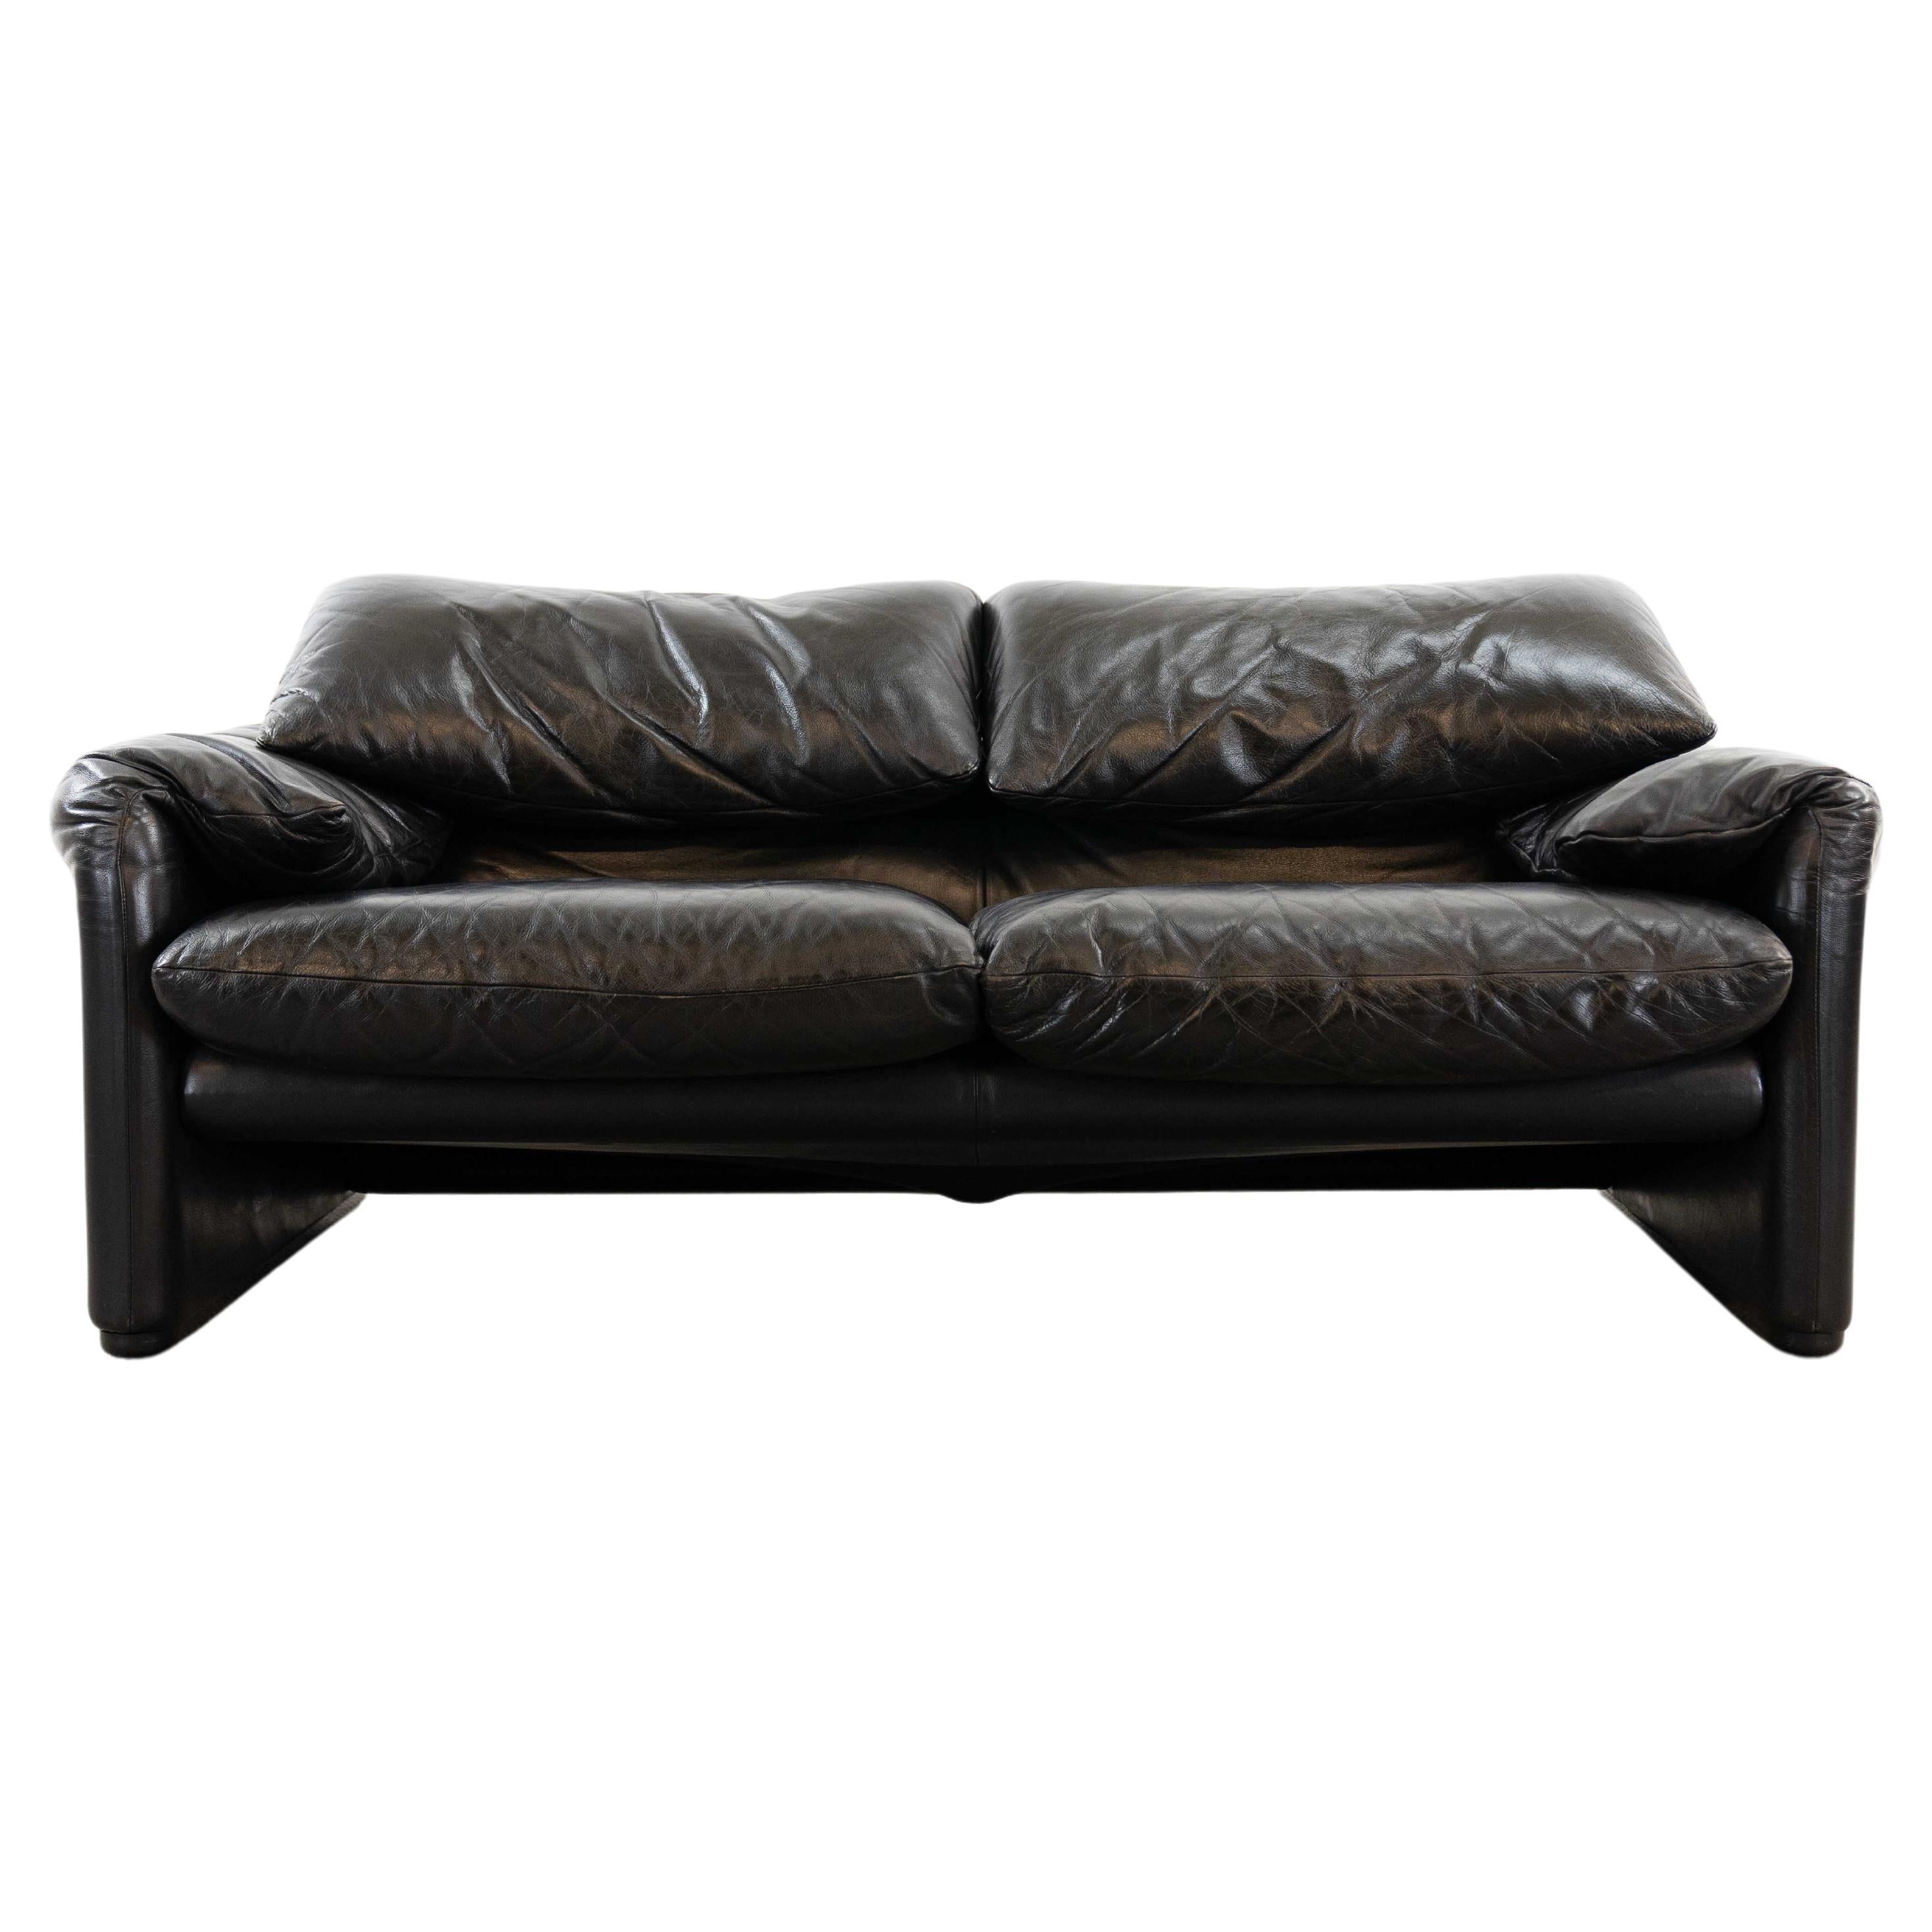 Maralunga 2-Seat Sofa in Black Leather by Vico Magistretti for Cassina, Italy